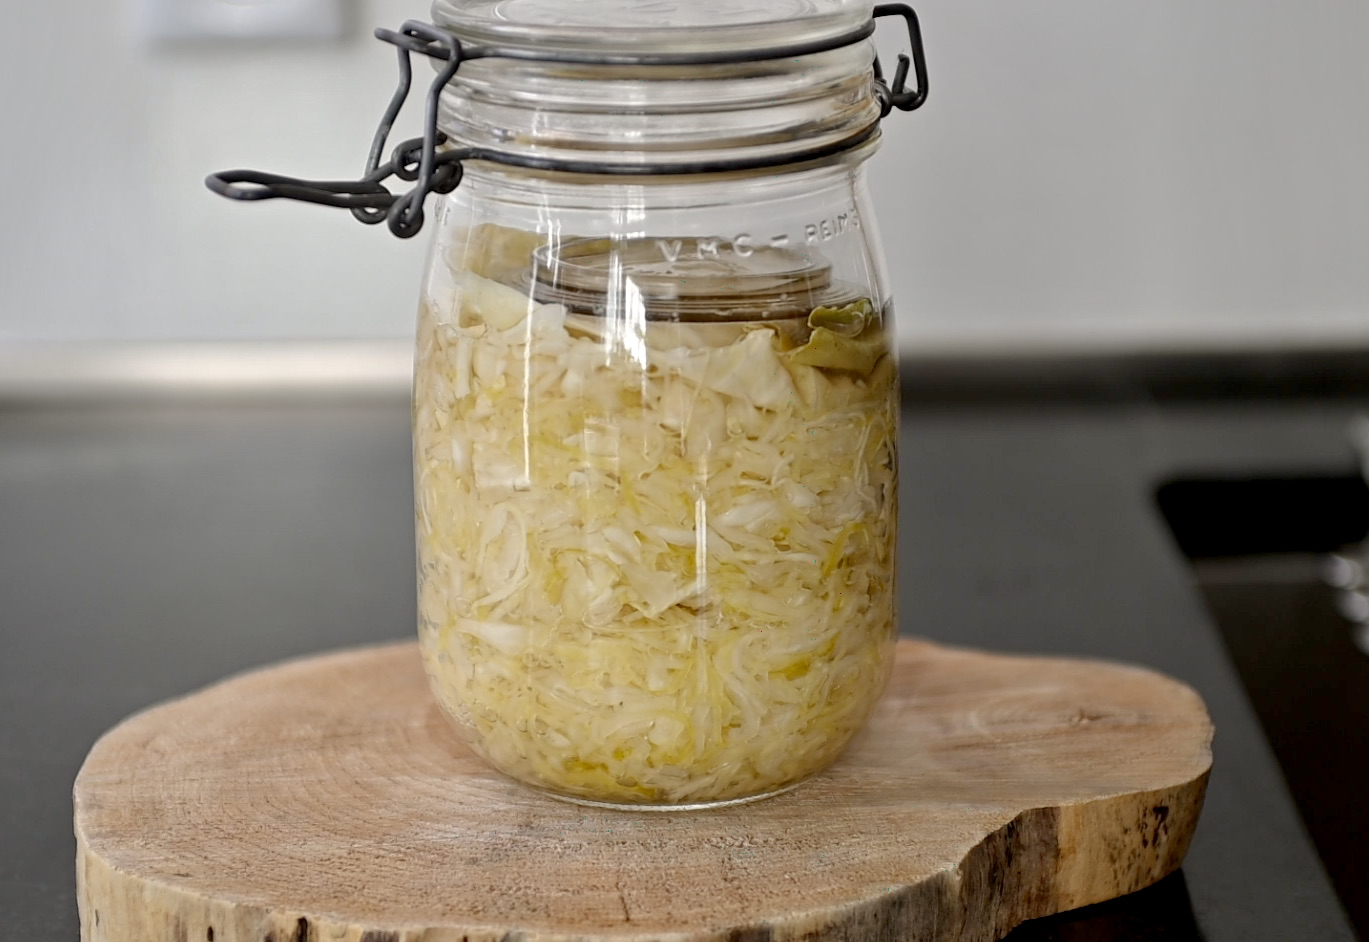 green cabbage sauerkraut after being fermented for 7 days